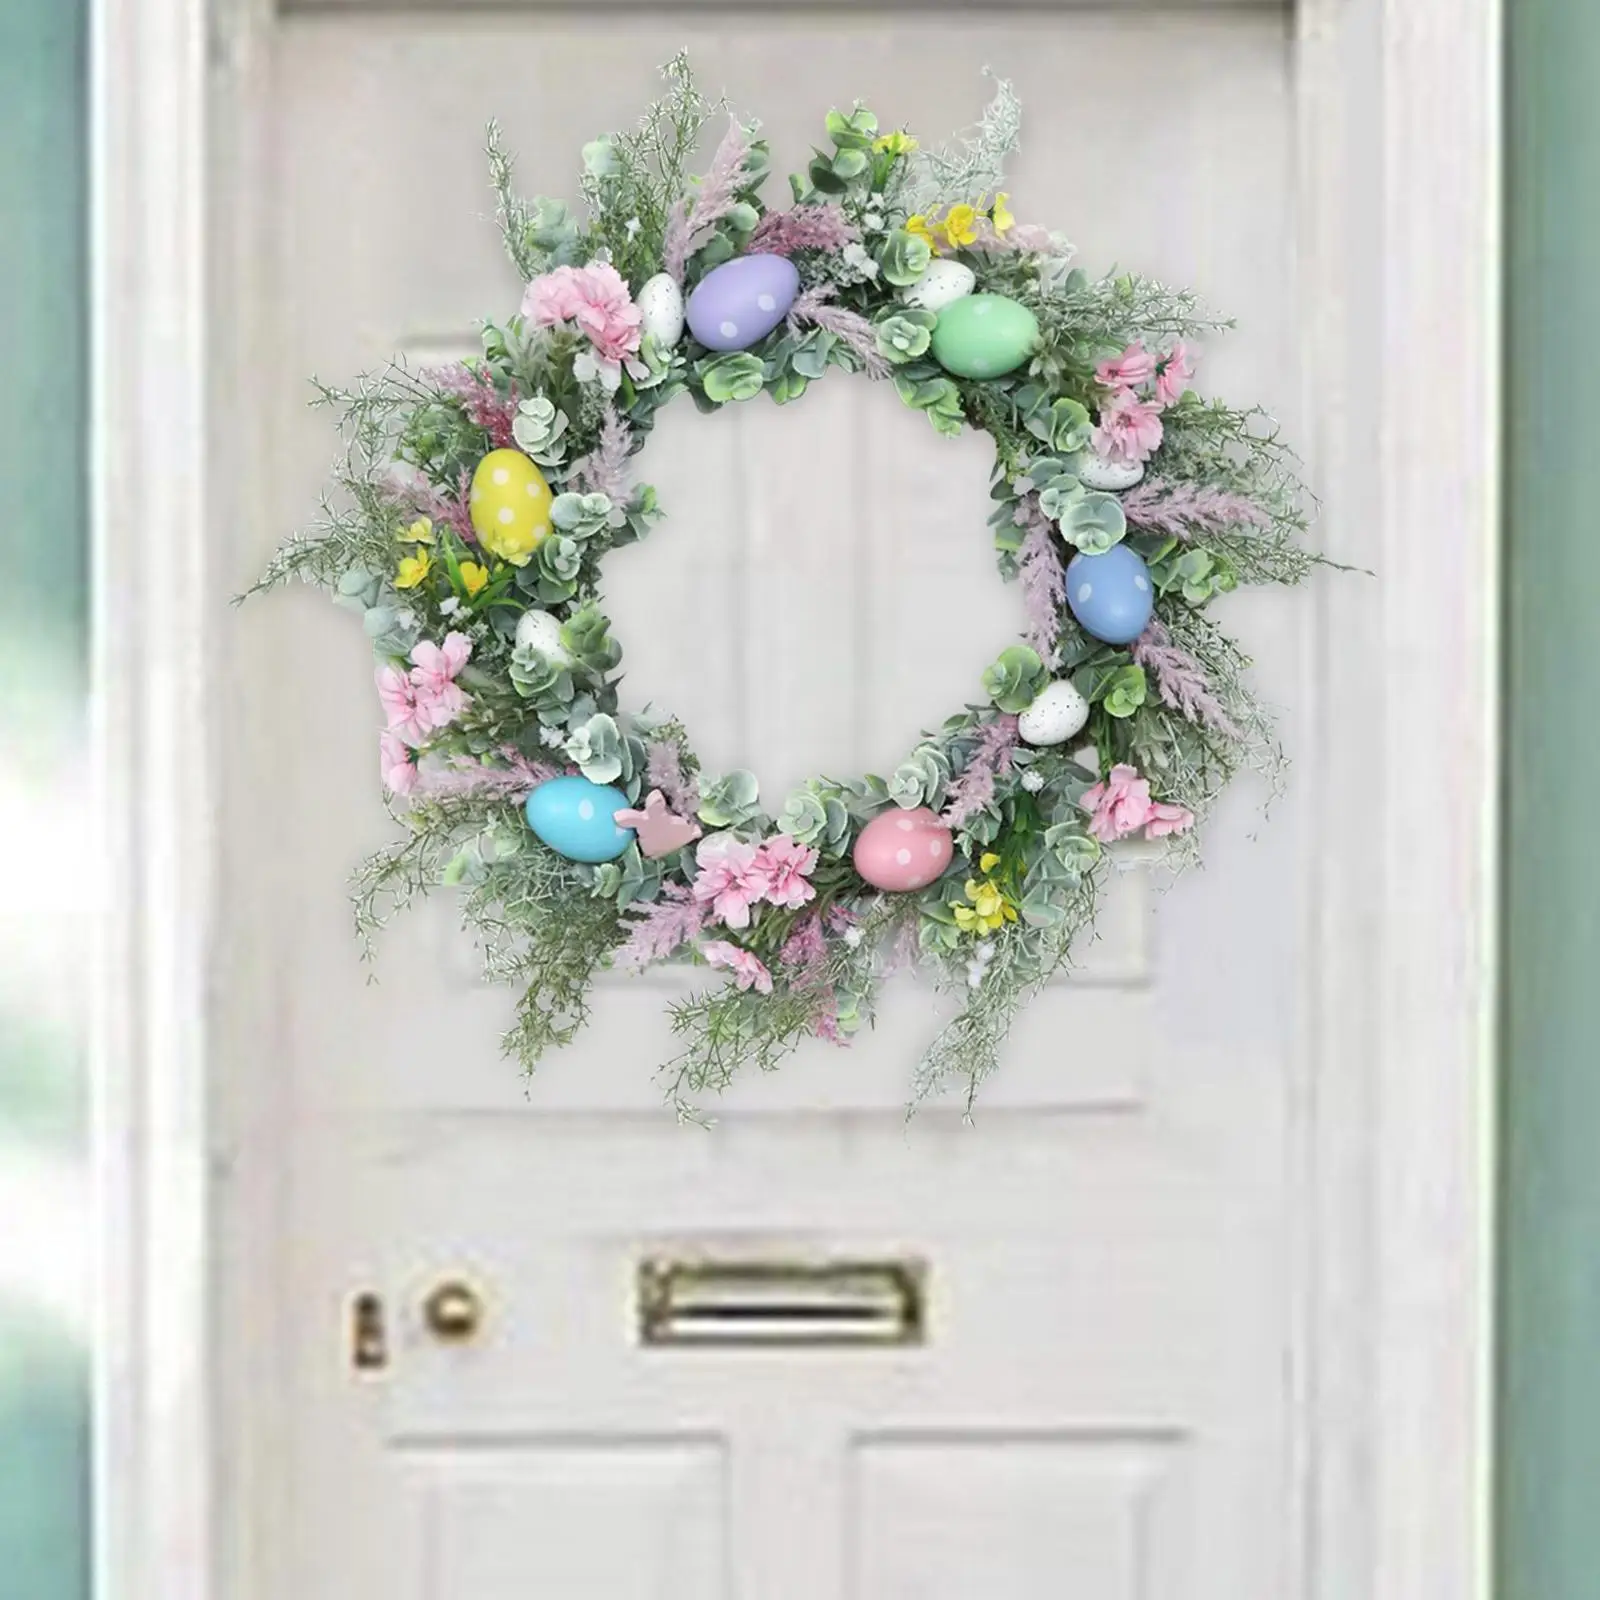 45cm Easter Egg Wreath Front Door Decorative Wall Hanging Greenery Garland for Indoor Outdoor Garden Home Decoration Ornament